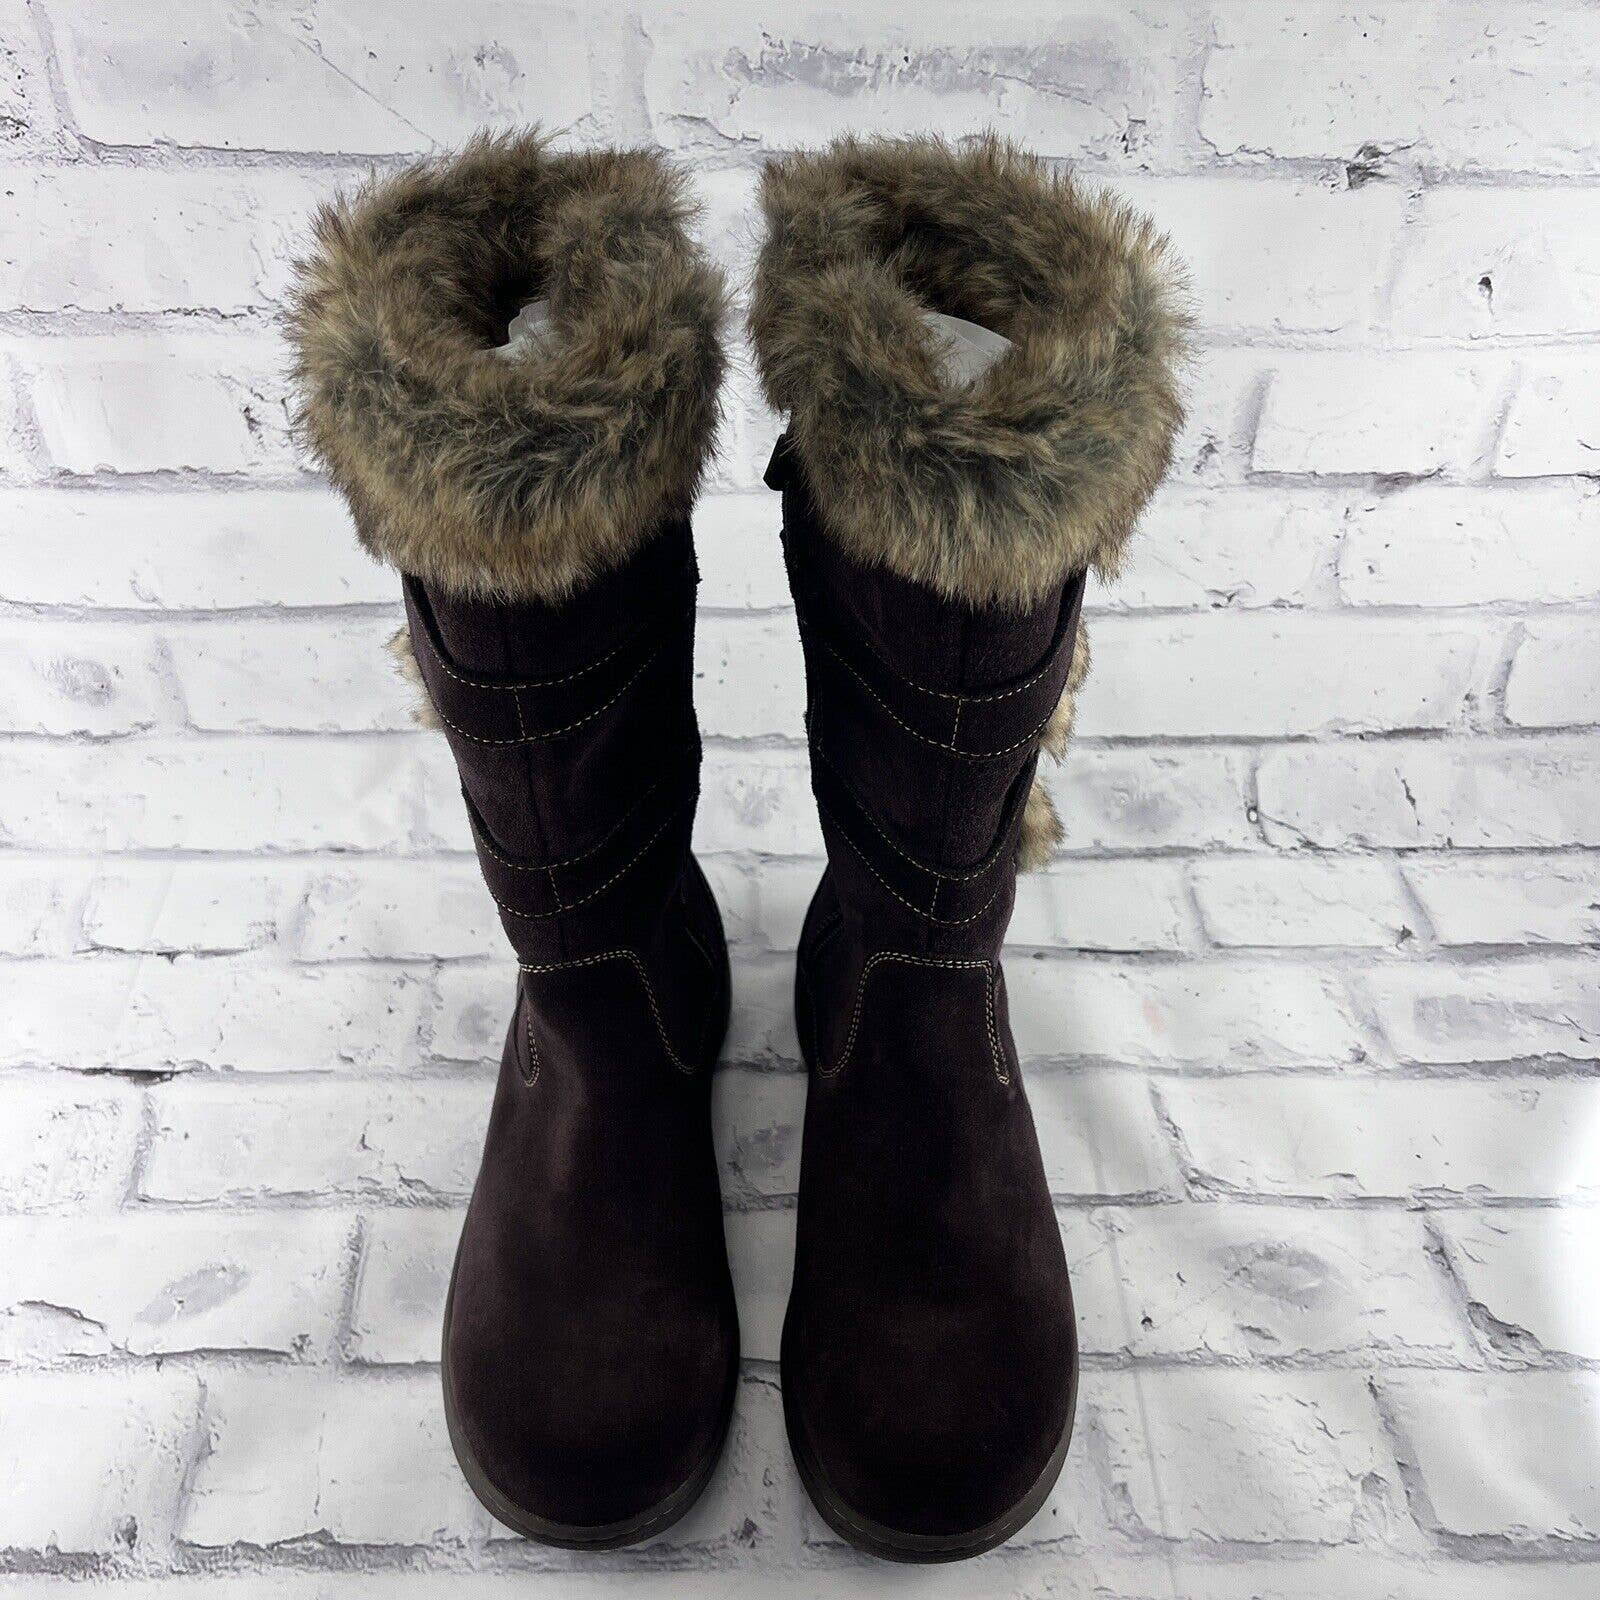 LL Bean Nordic Tek 2.5 Boots Size 9.5 M Brown Suede Fur Trim Waterproof Winter